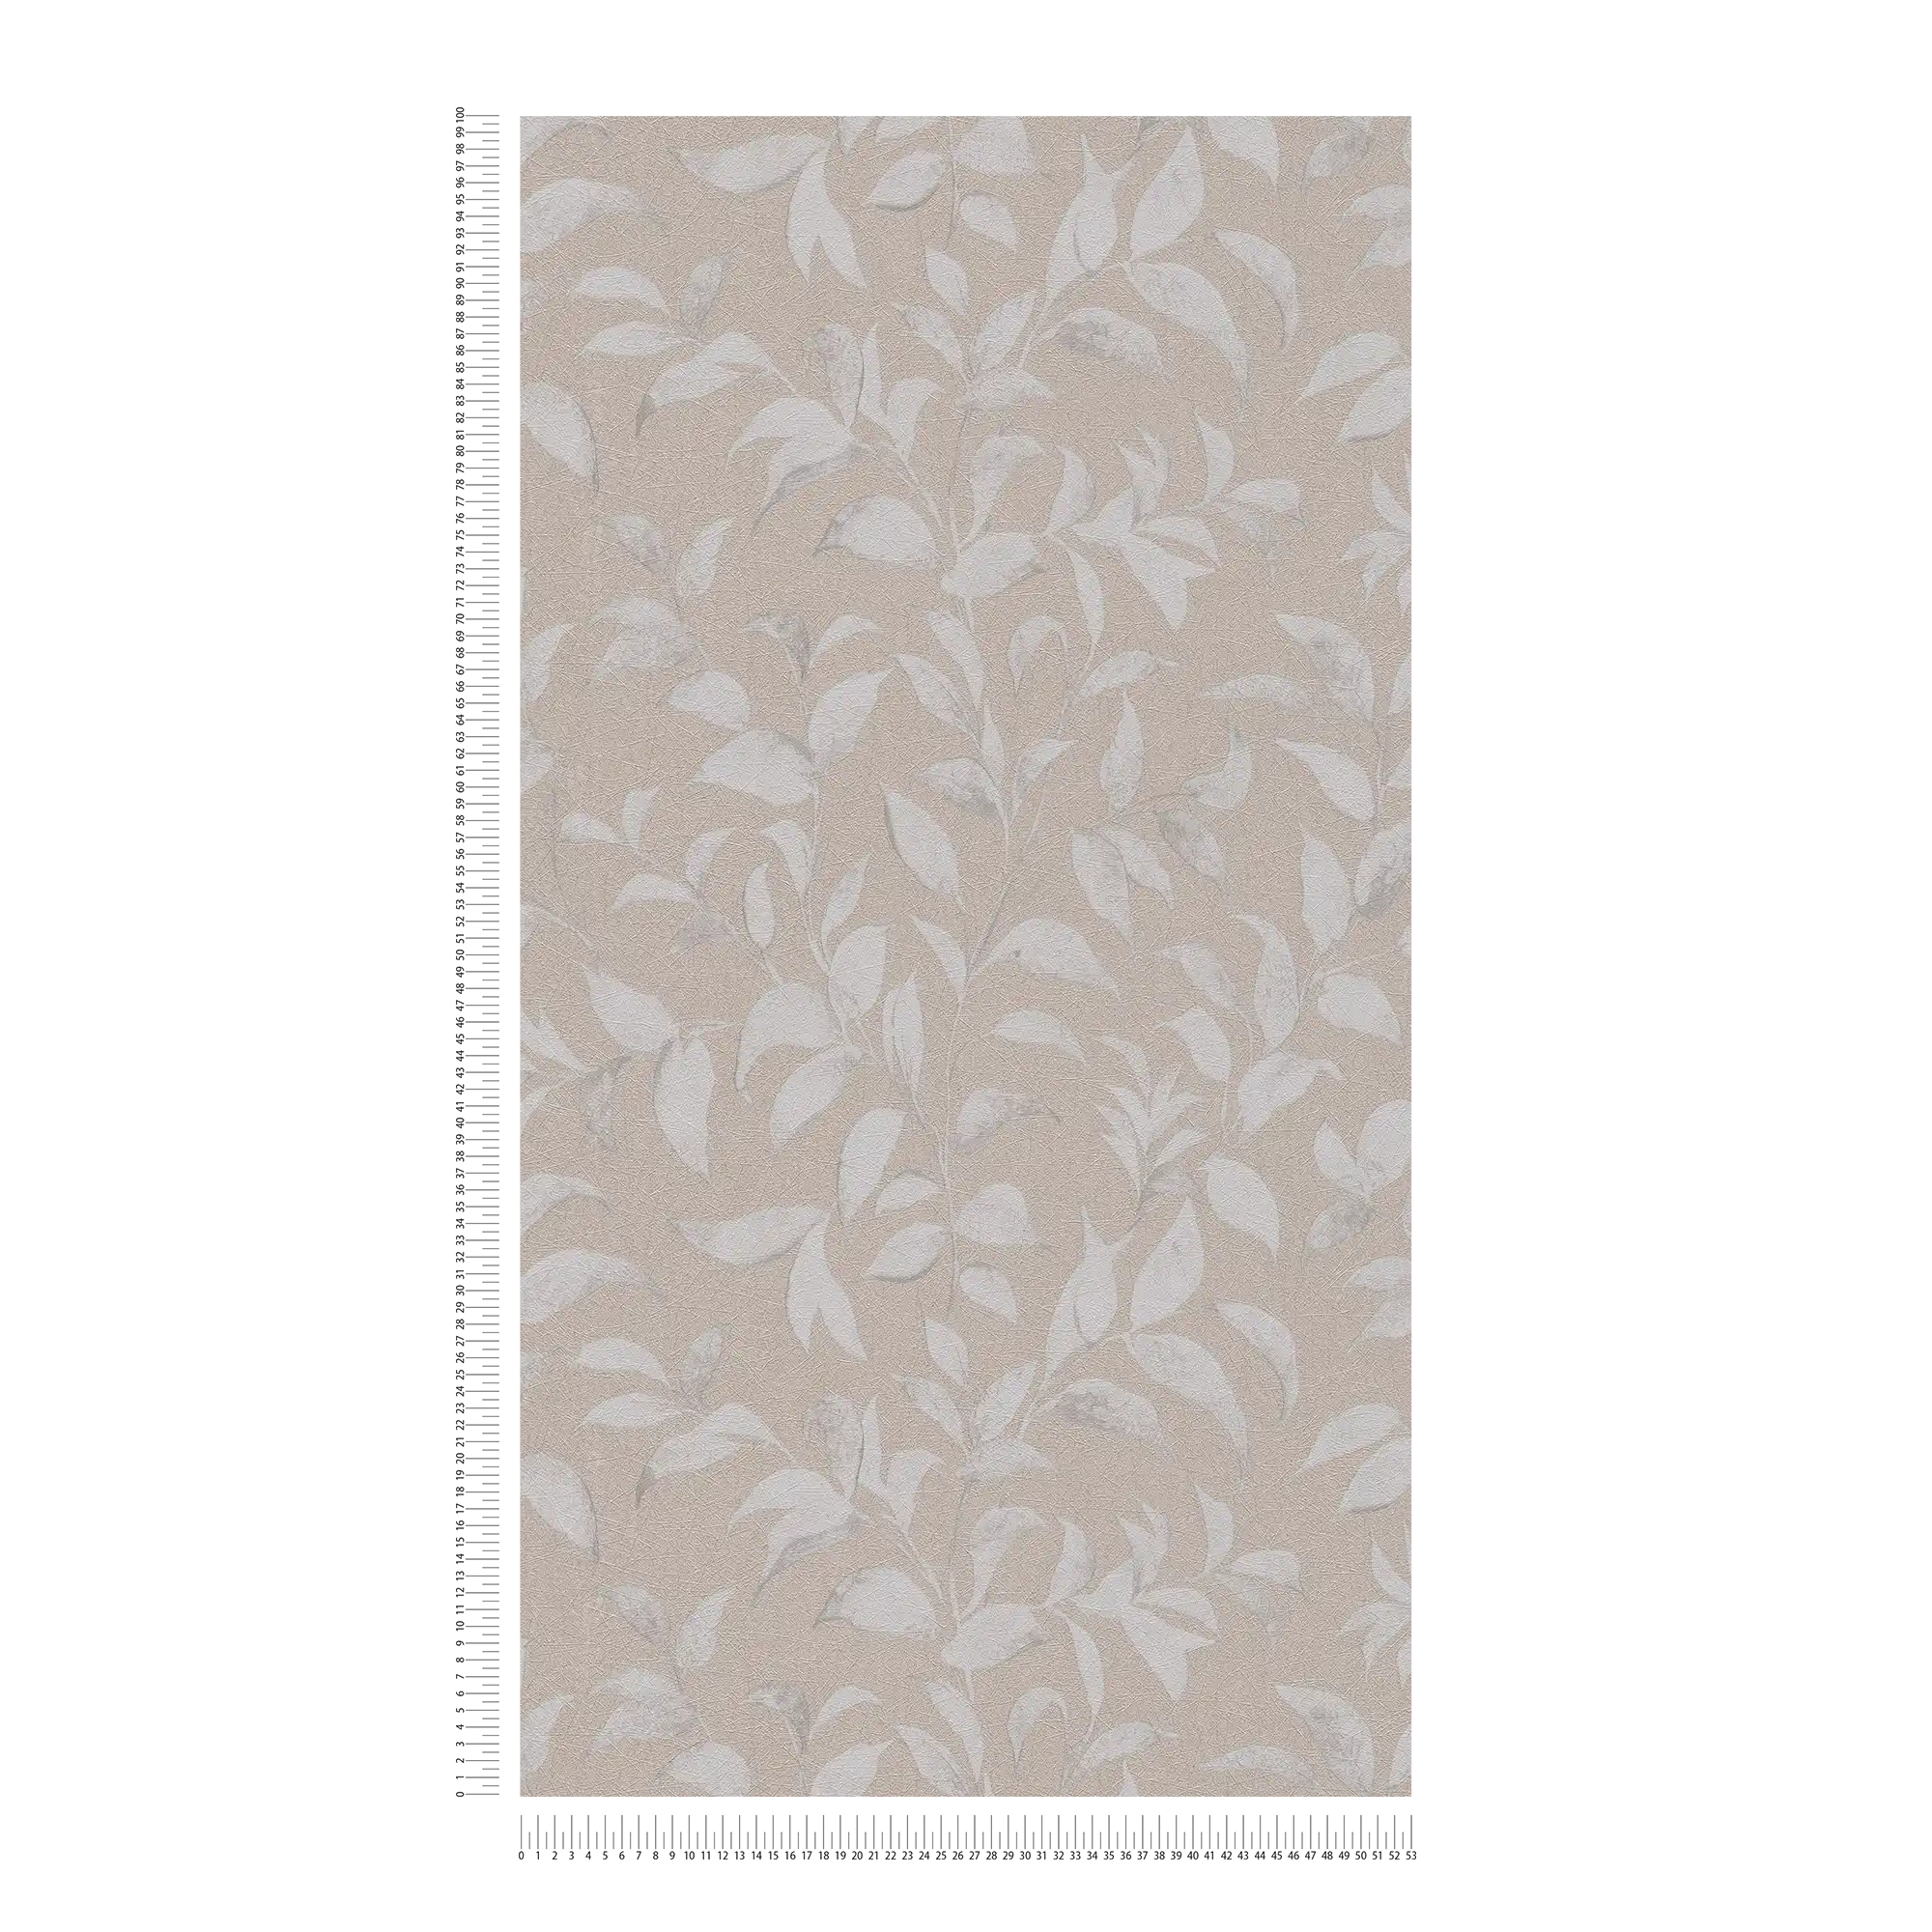             Florale Blätter-Tapete schimmernd strukturiert – Grau, Silber
        